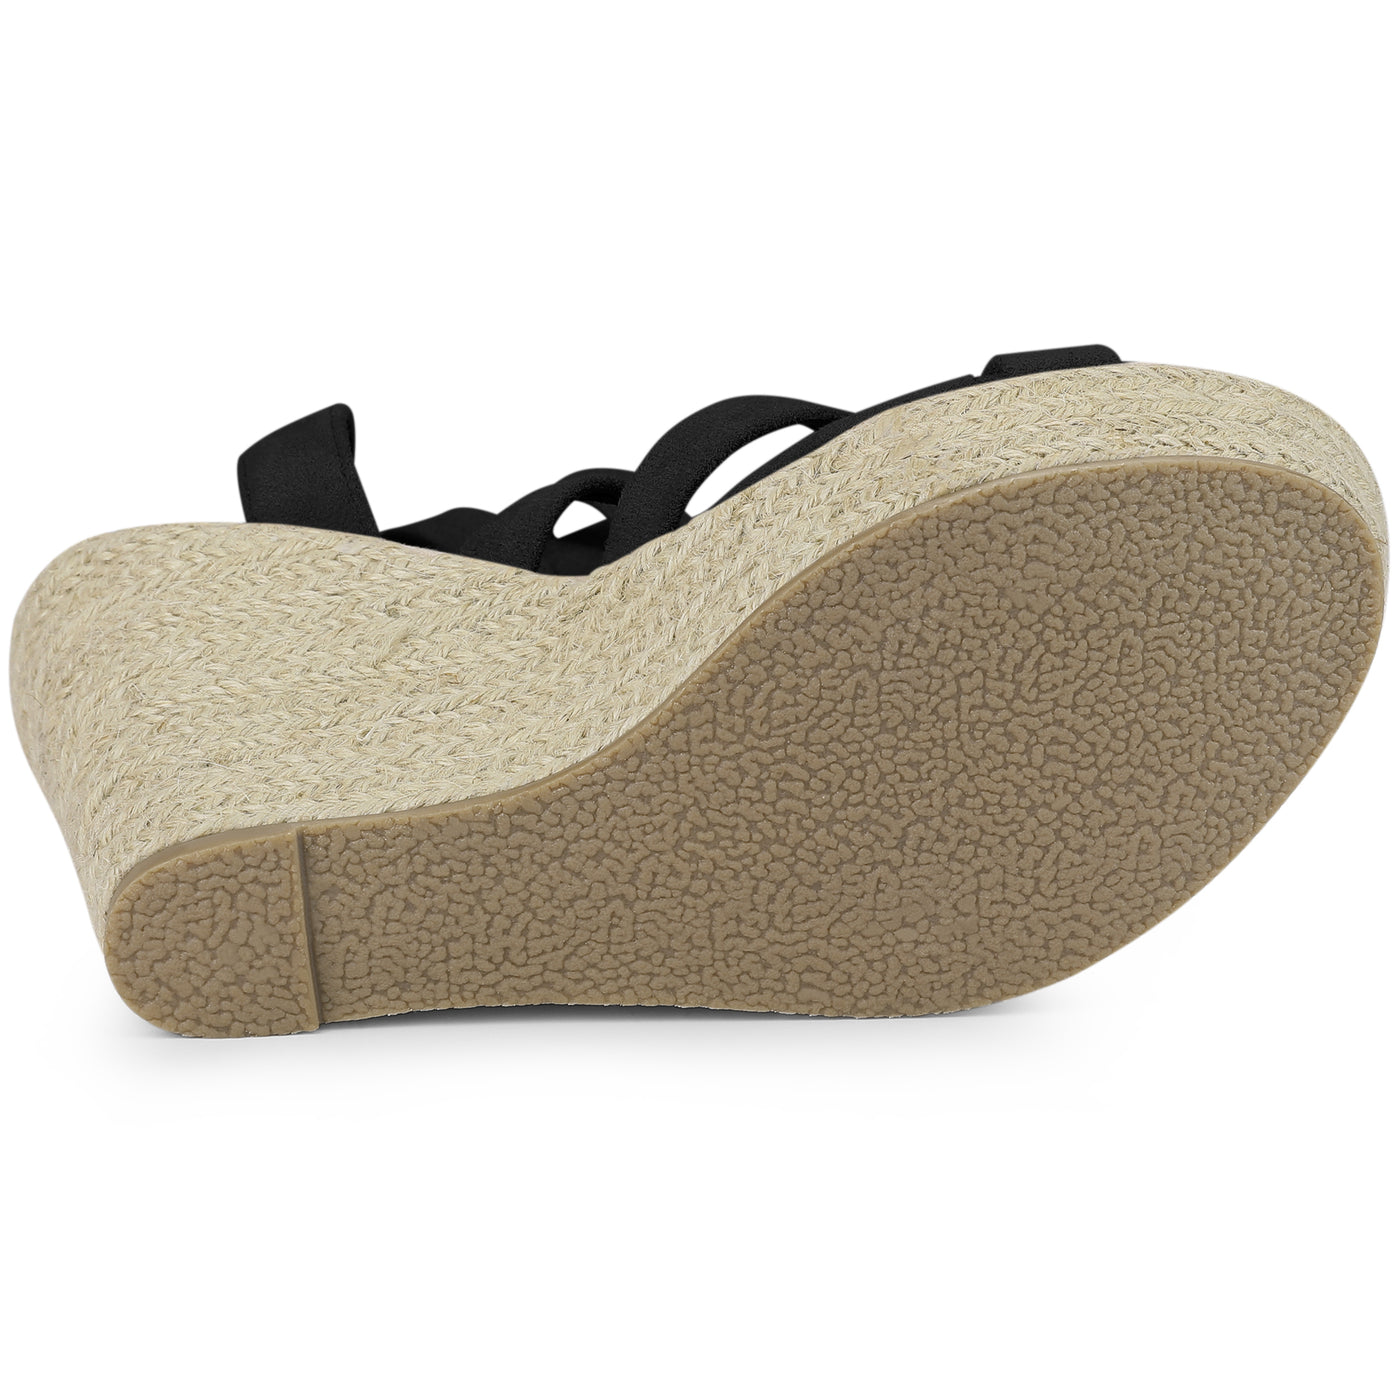 Allegra K Espadrilles Platform Heel Lace Up Wedge Sandals